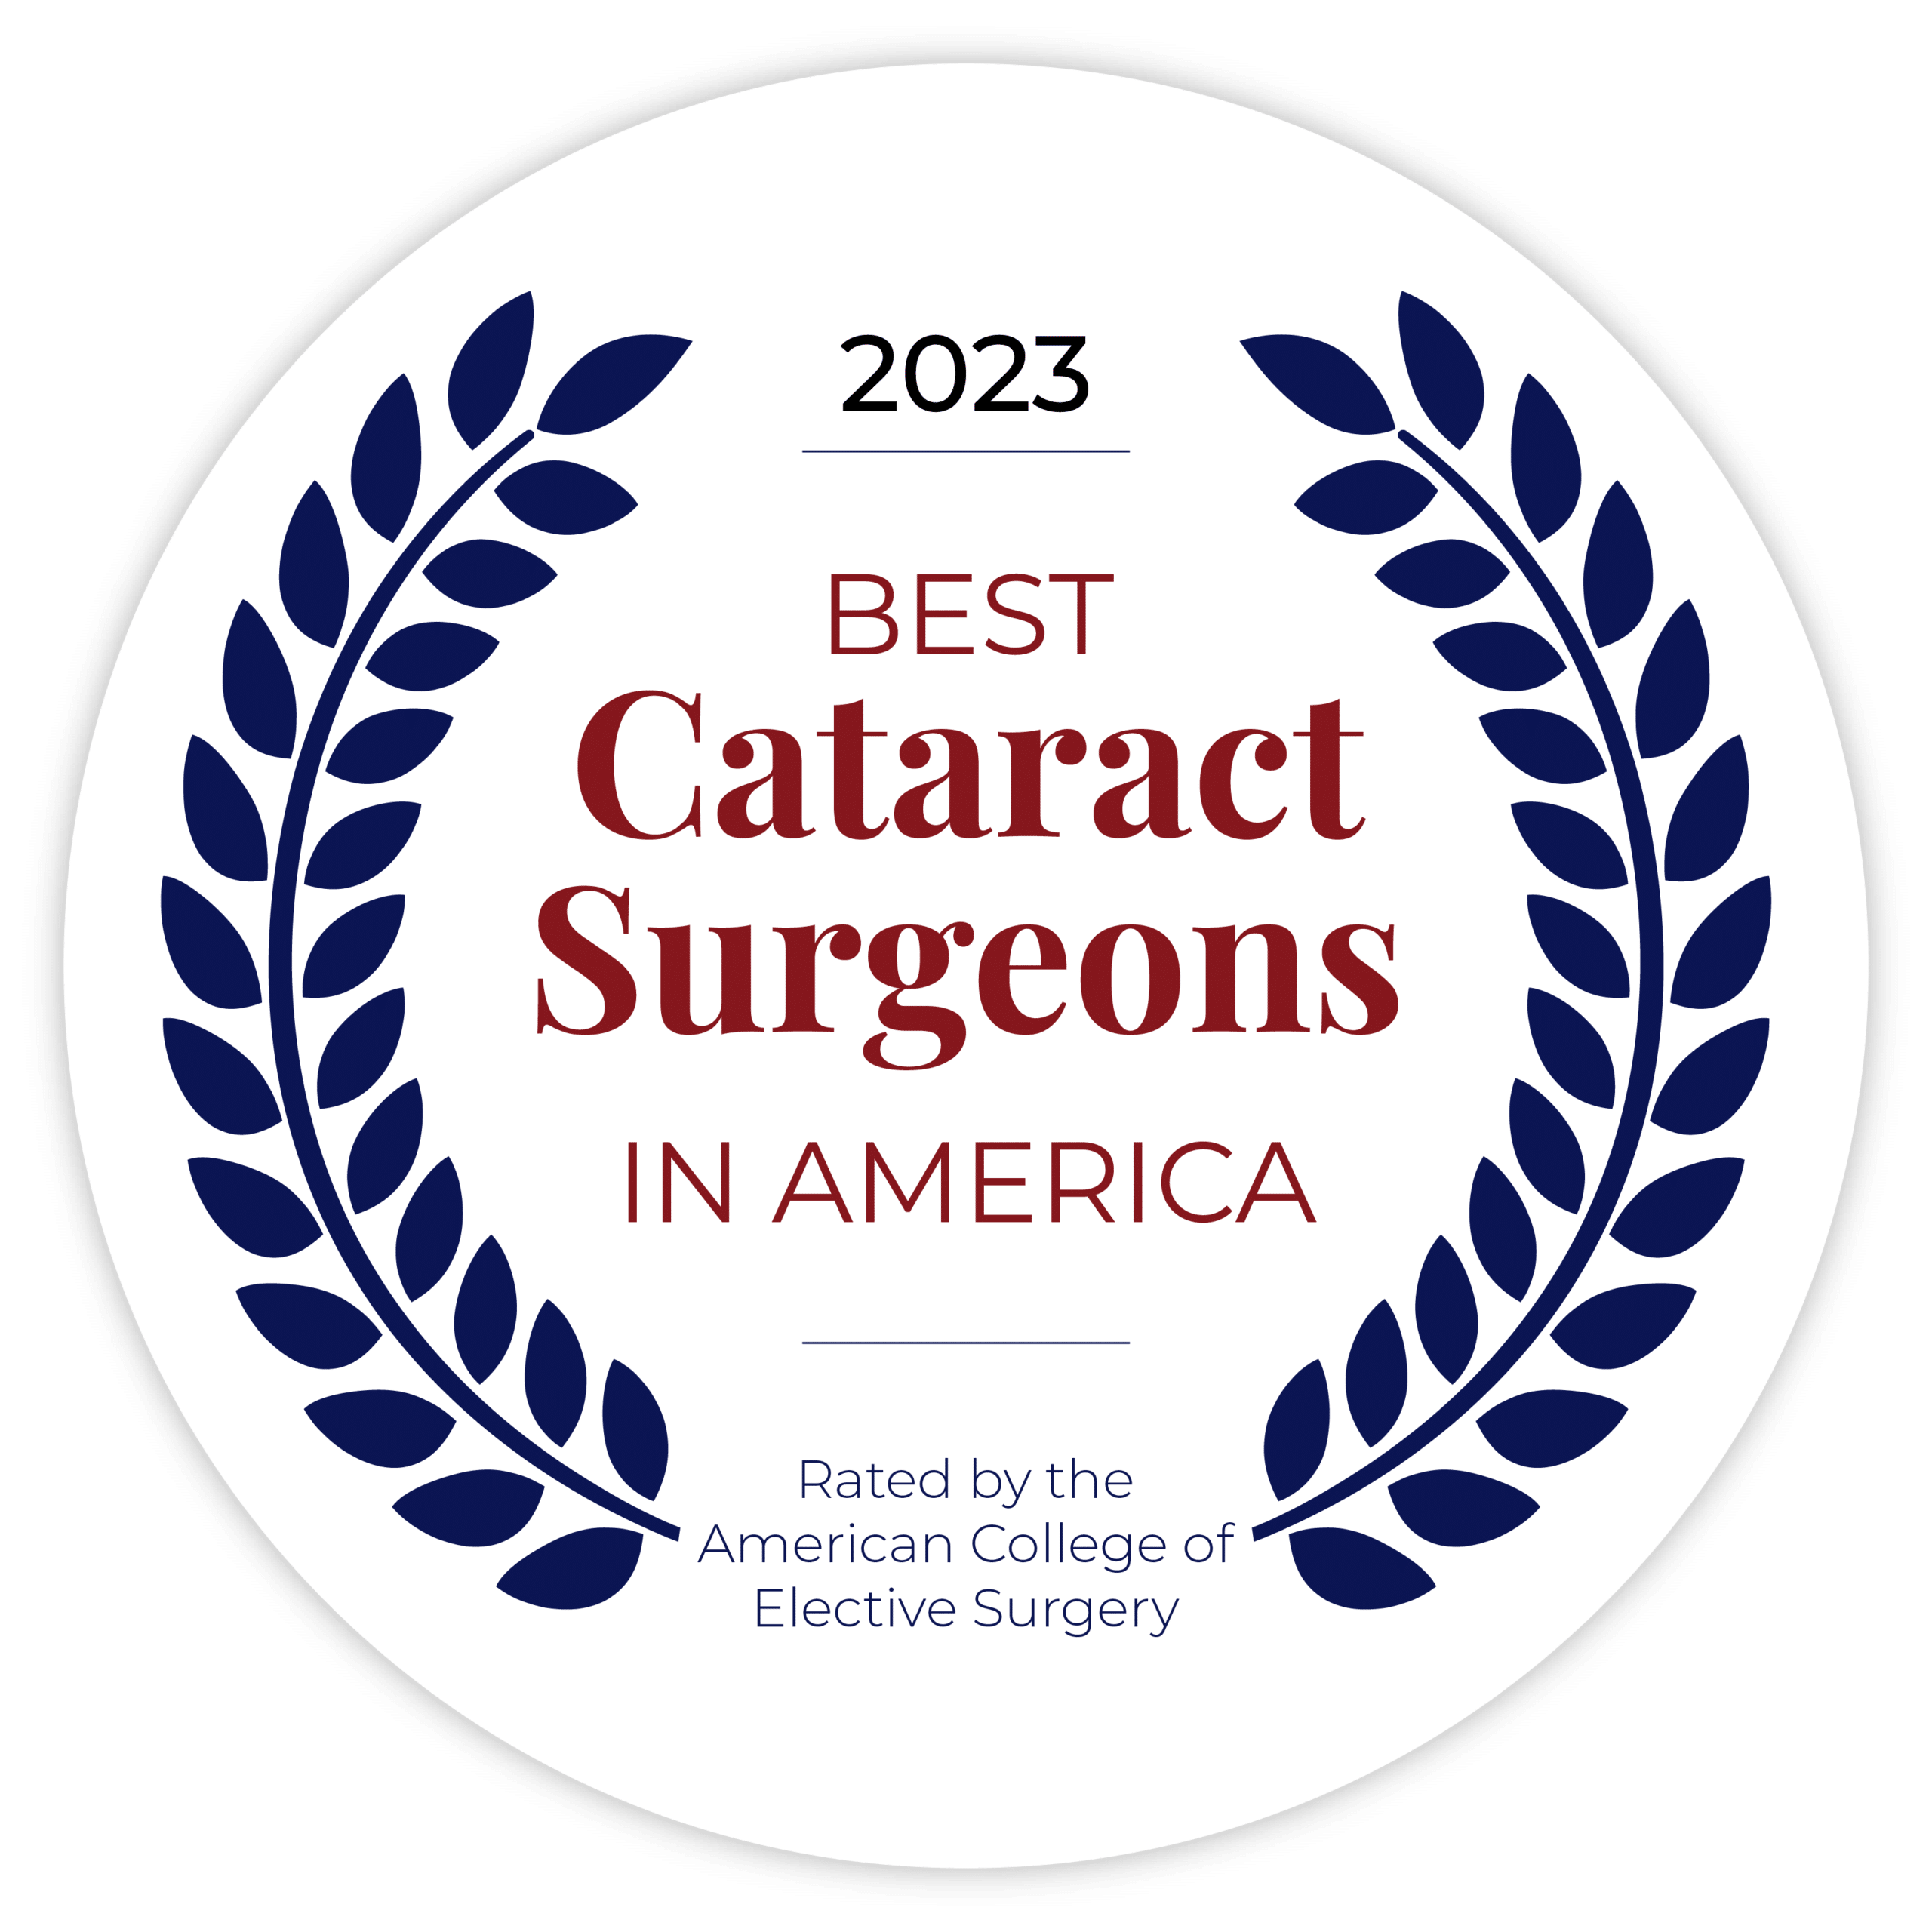 Best Cataract Surgeons in America 2023